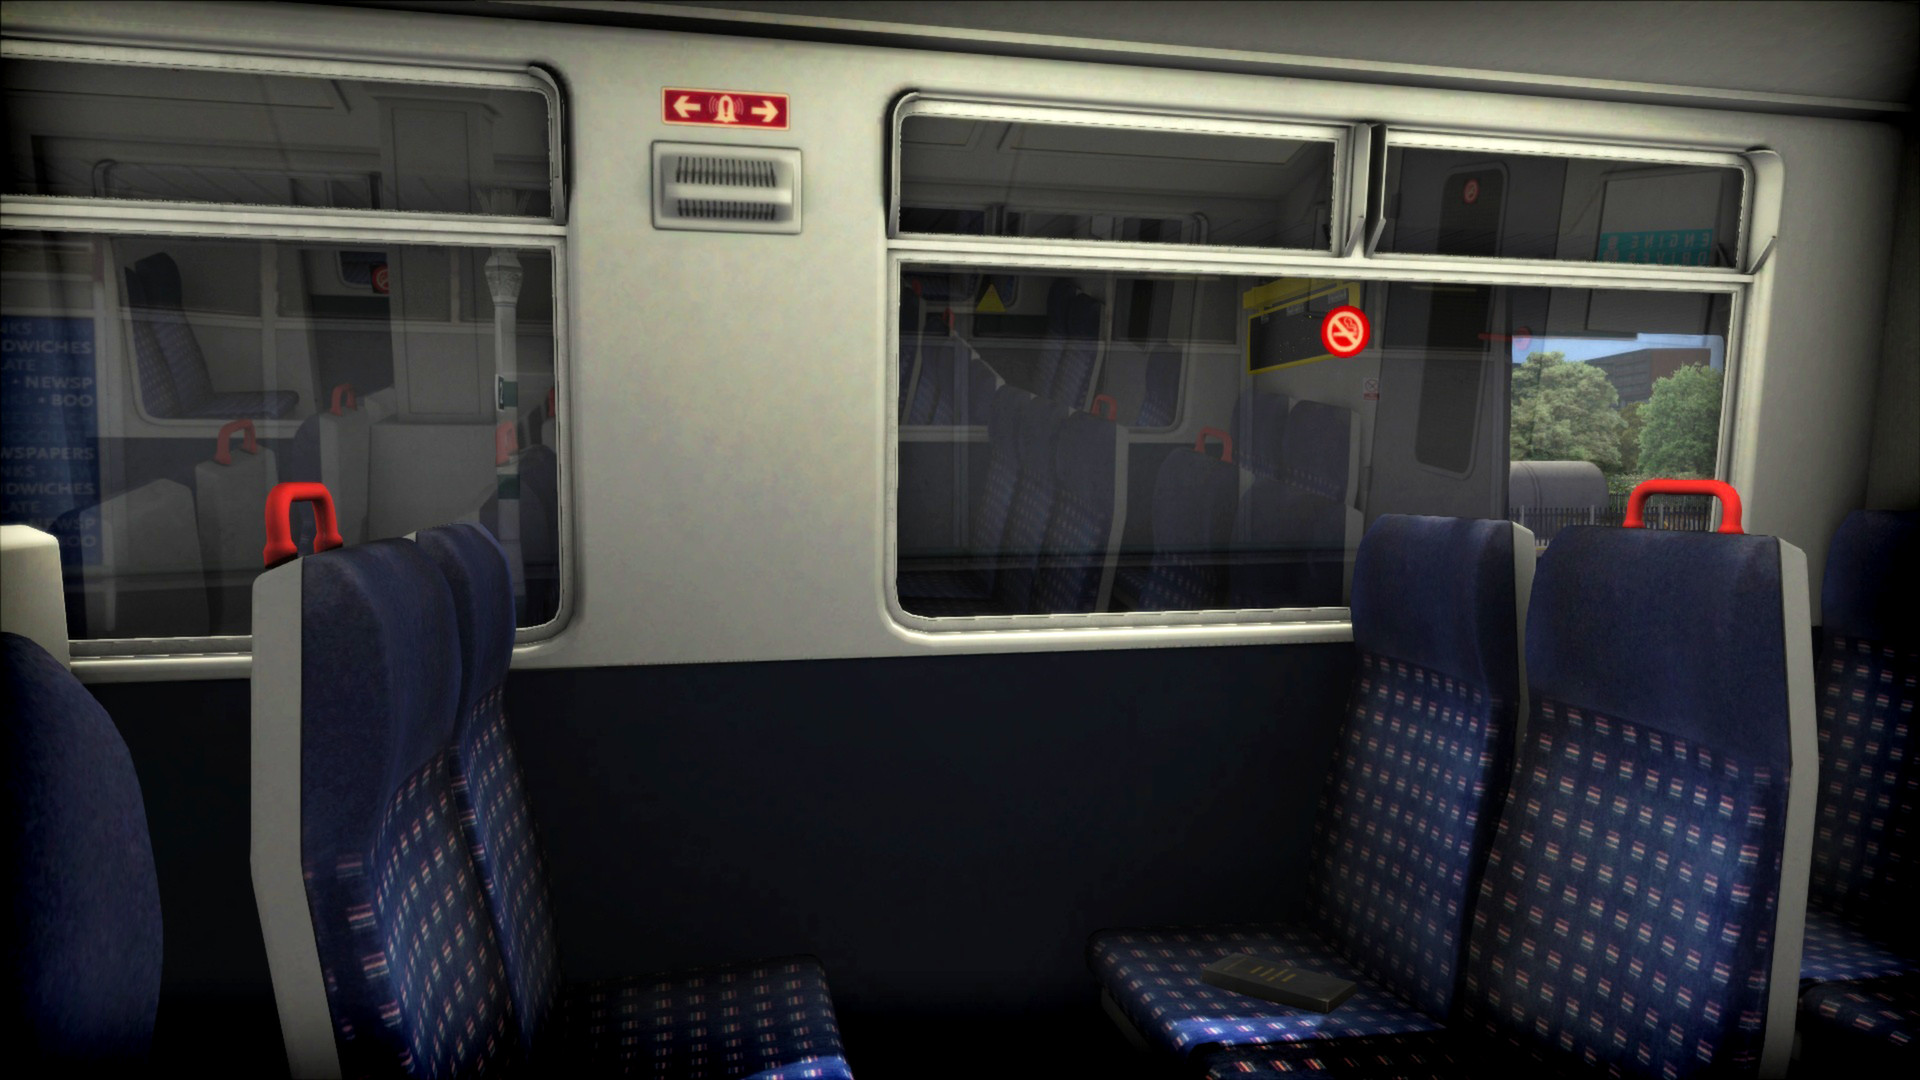 Train Simulator: First Capital Connect Class 319 EMU Add-On screenshot